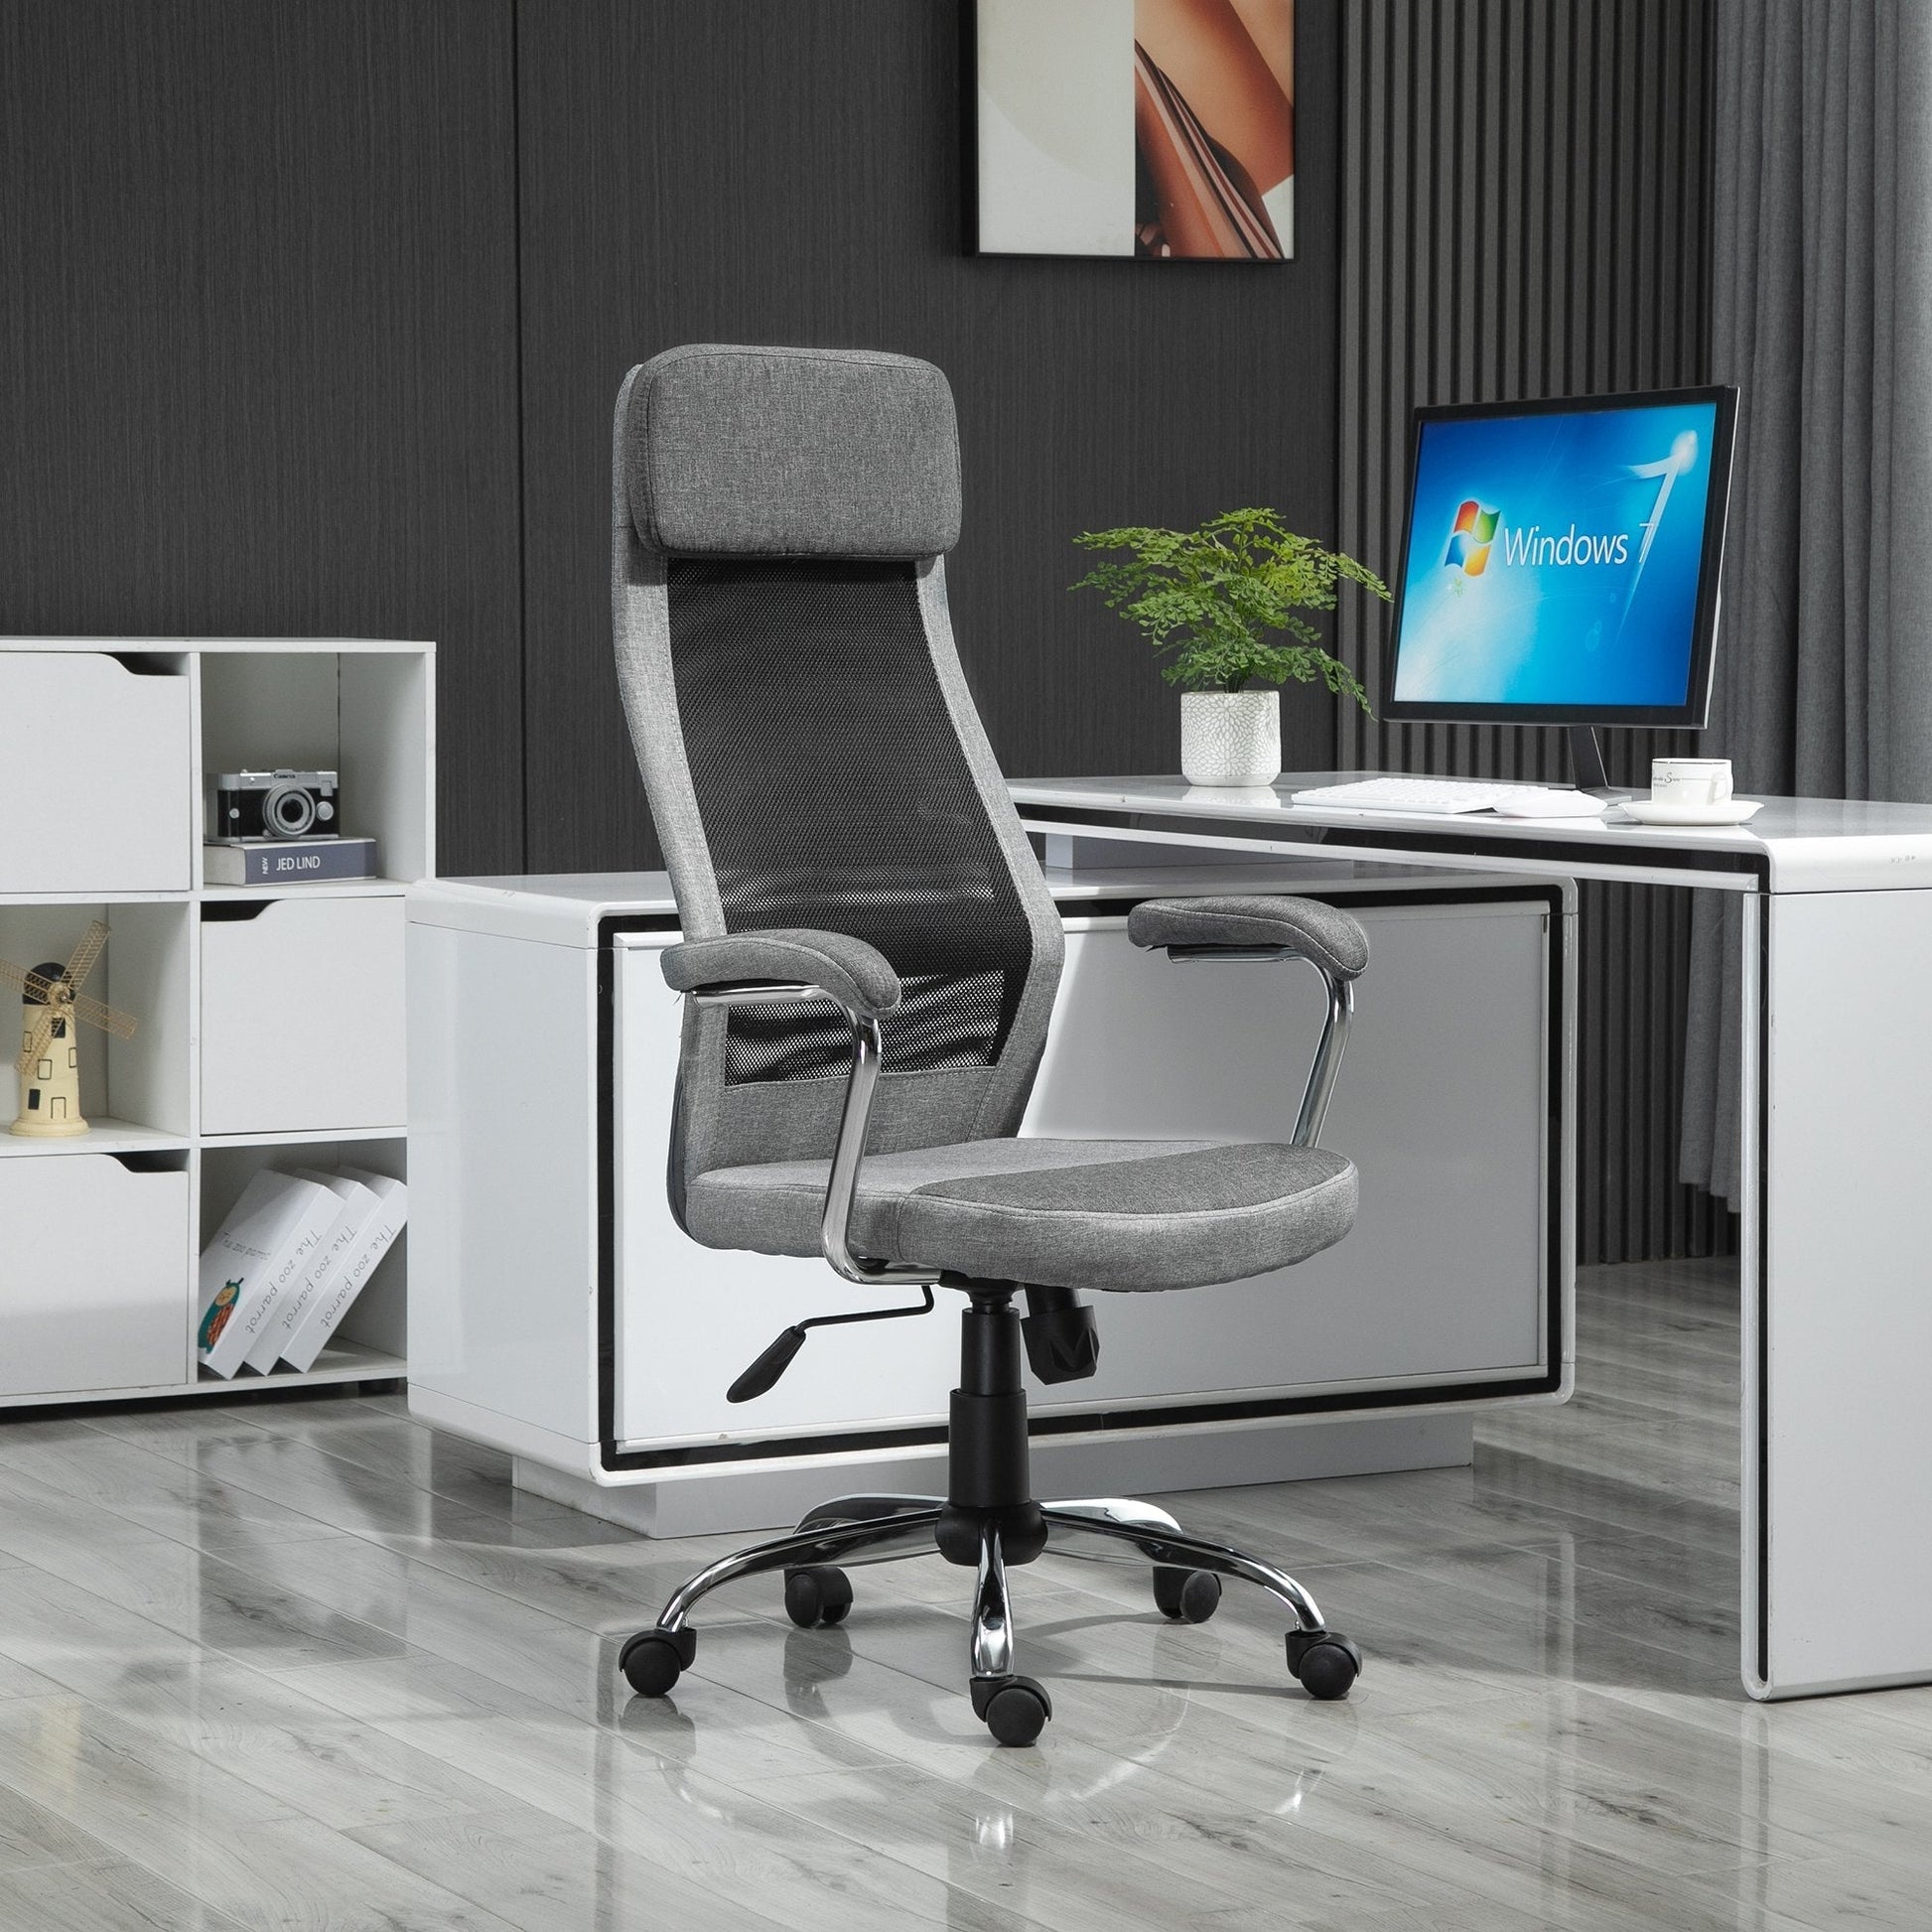 ProperAV Extra Linen-Feel Mesh Fabric High Back Swivel Office Chair - Grey - maplin.co.uk